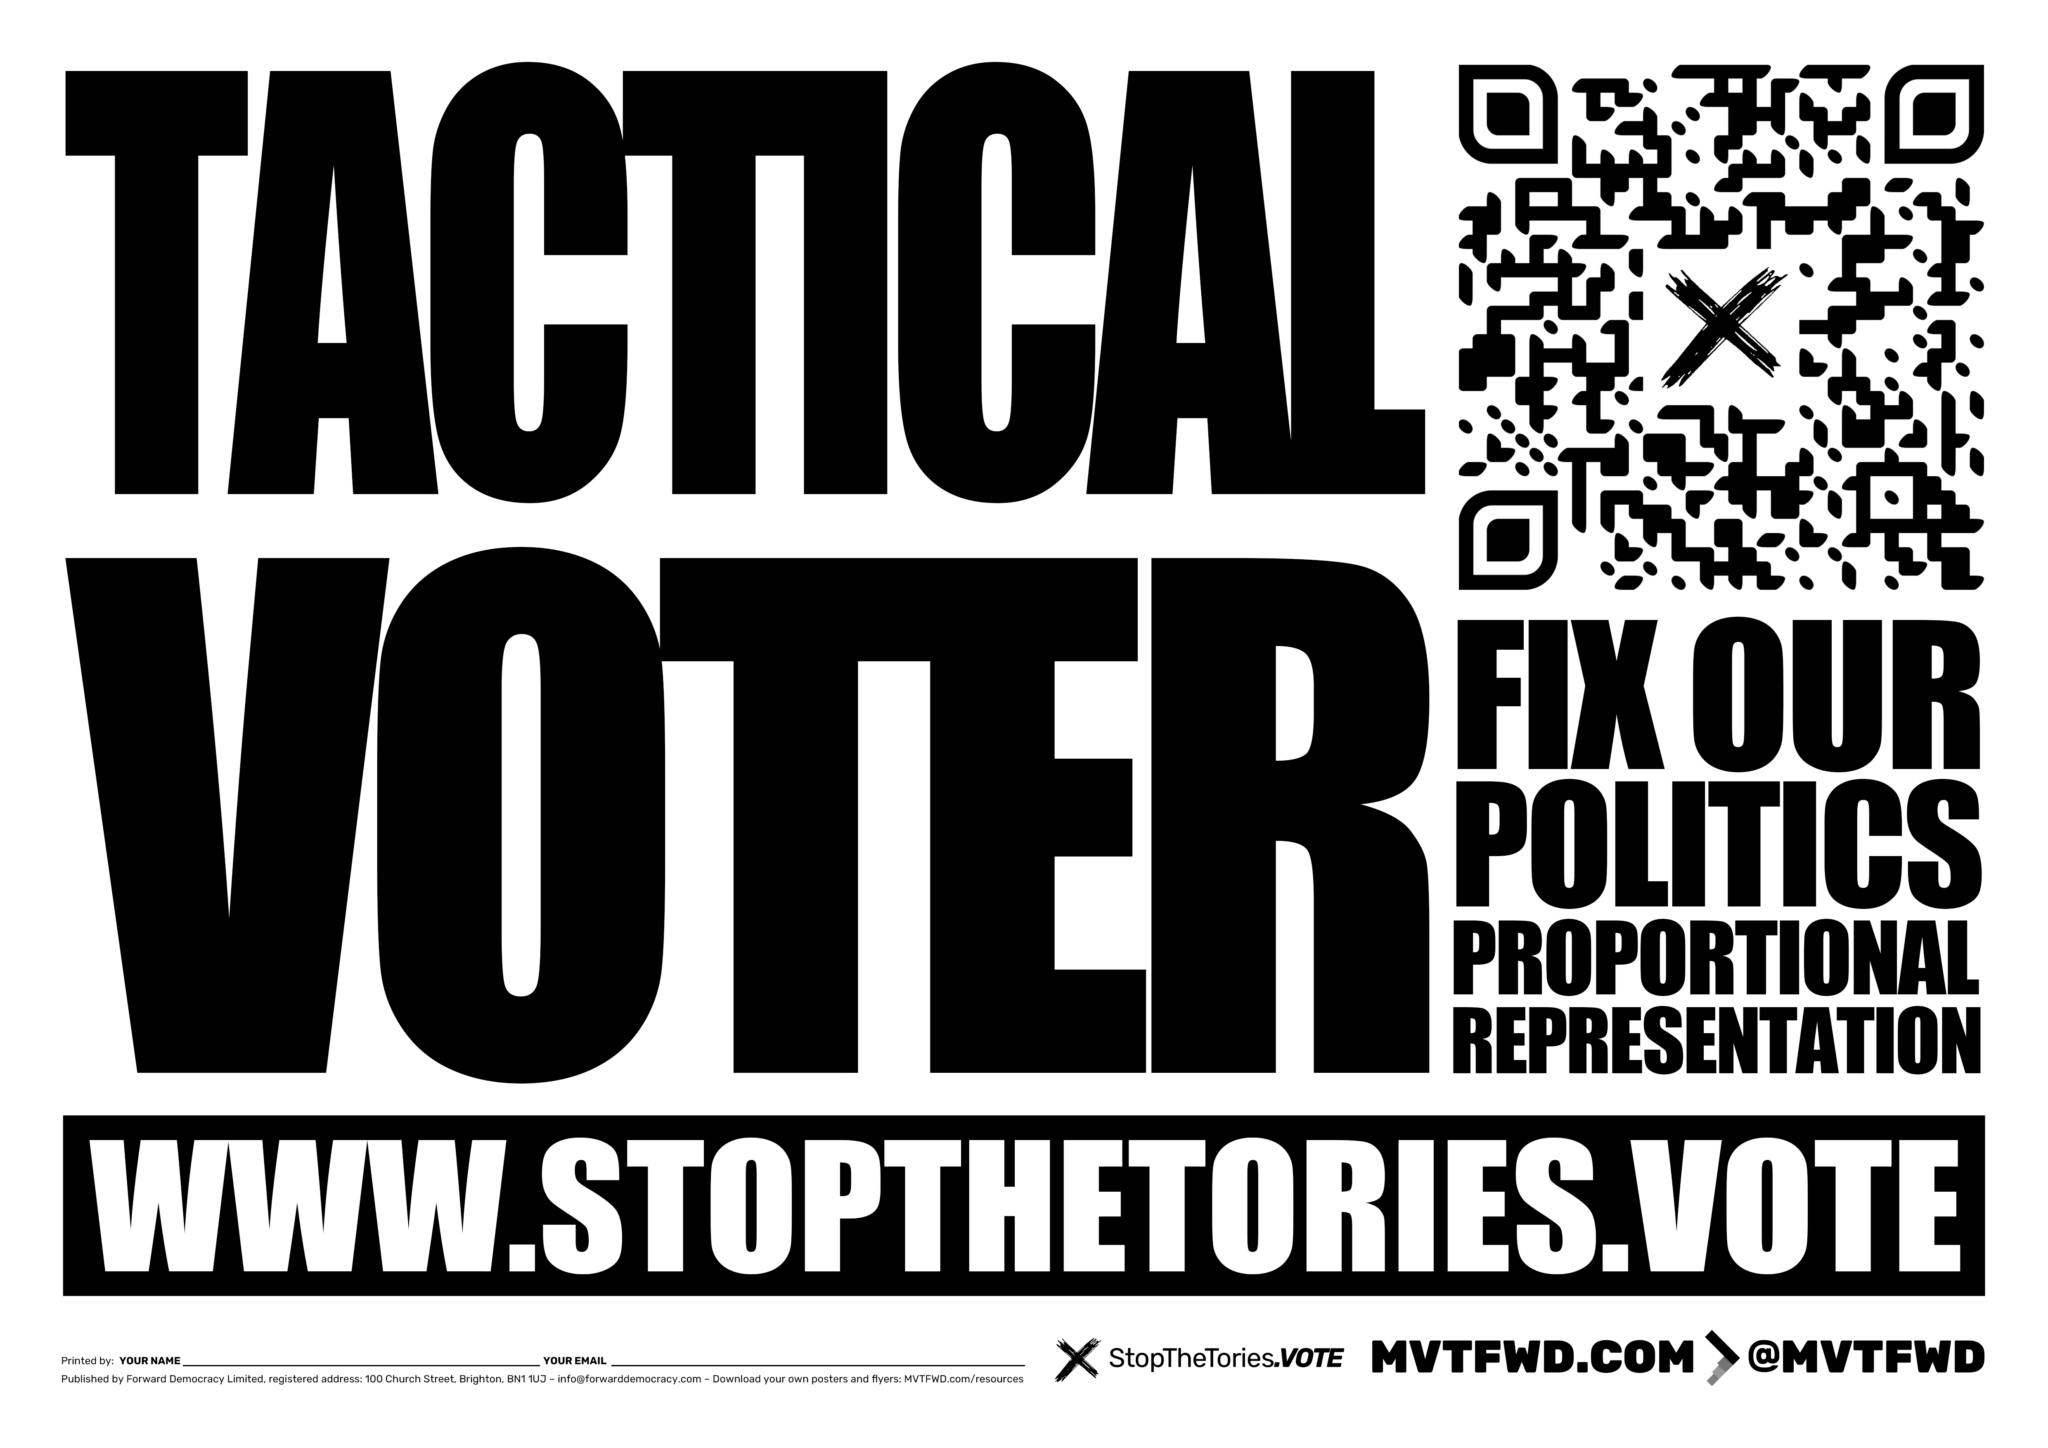 StopTheTories Tactical Voter horizontal poster